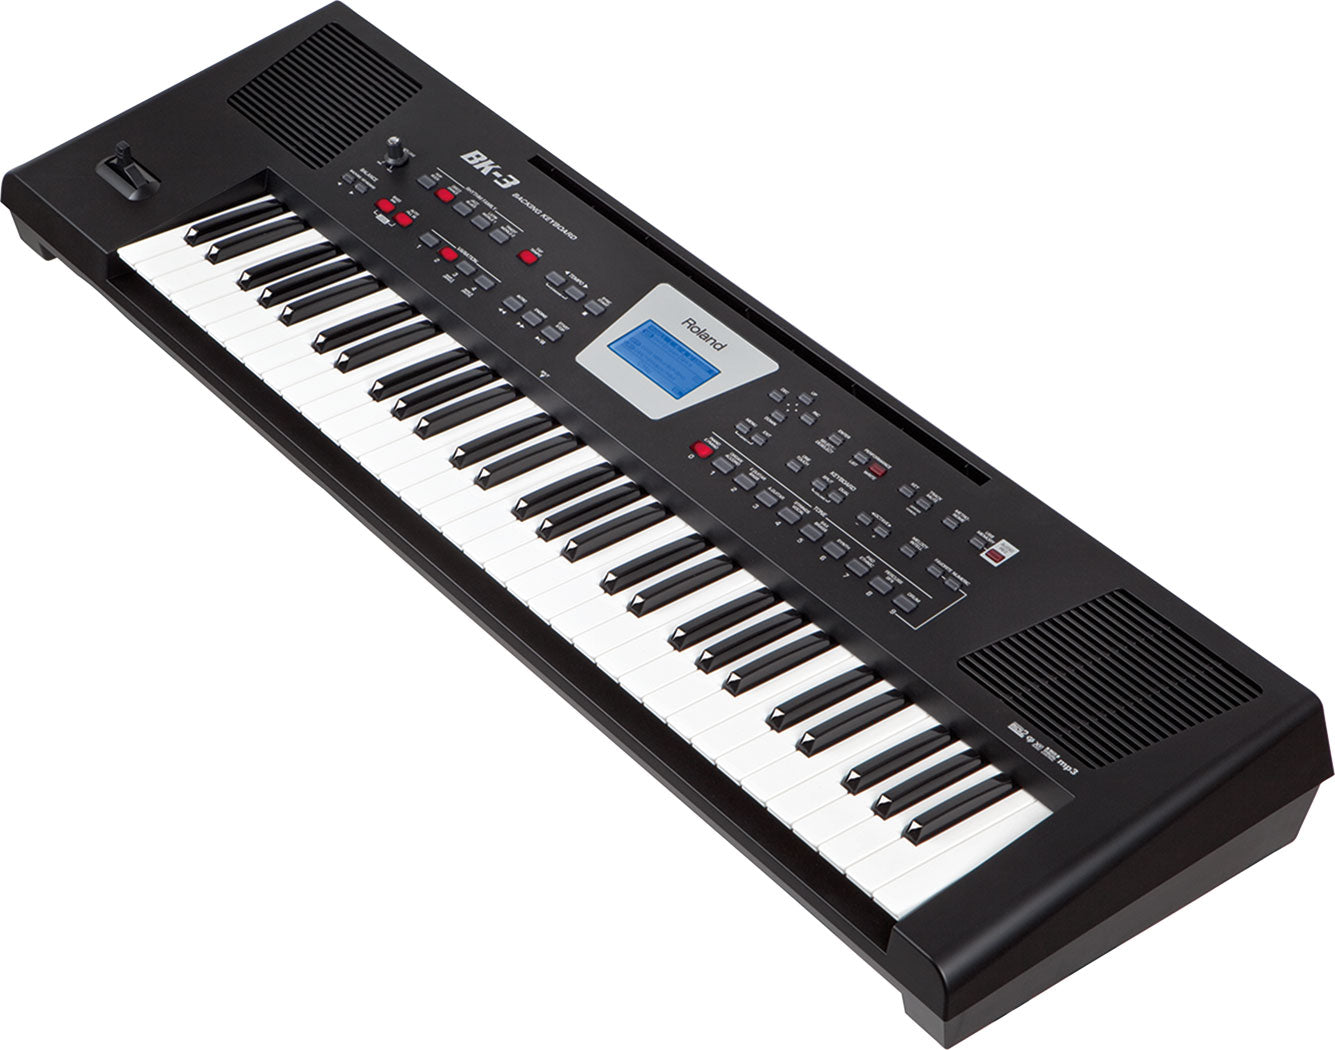 Roland BK-3 61-Keys Black Backing Keyboard with FREE Shipping (BK3 BK 3), ROLAND, KEYBOARD, roland-keyboard-bk3-bk, ZOSO MUSIC SDN BHD